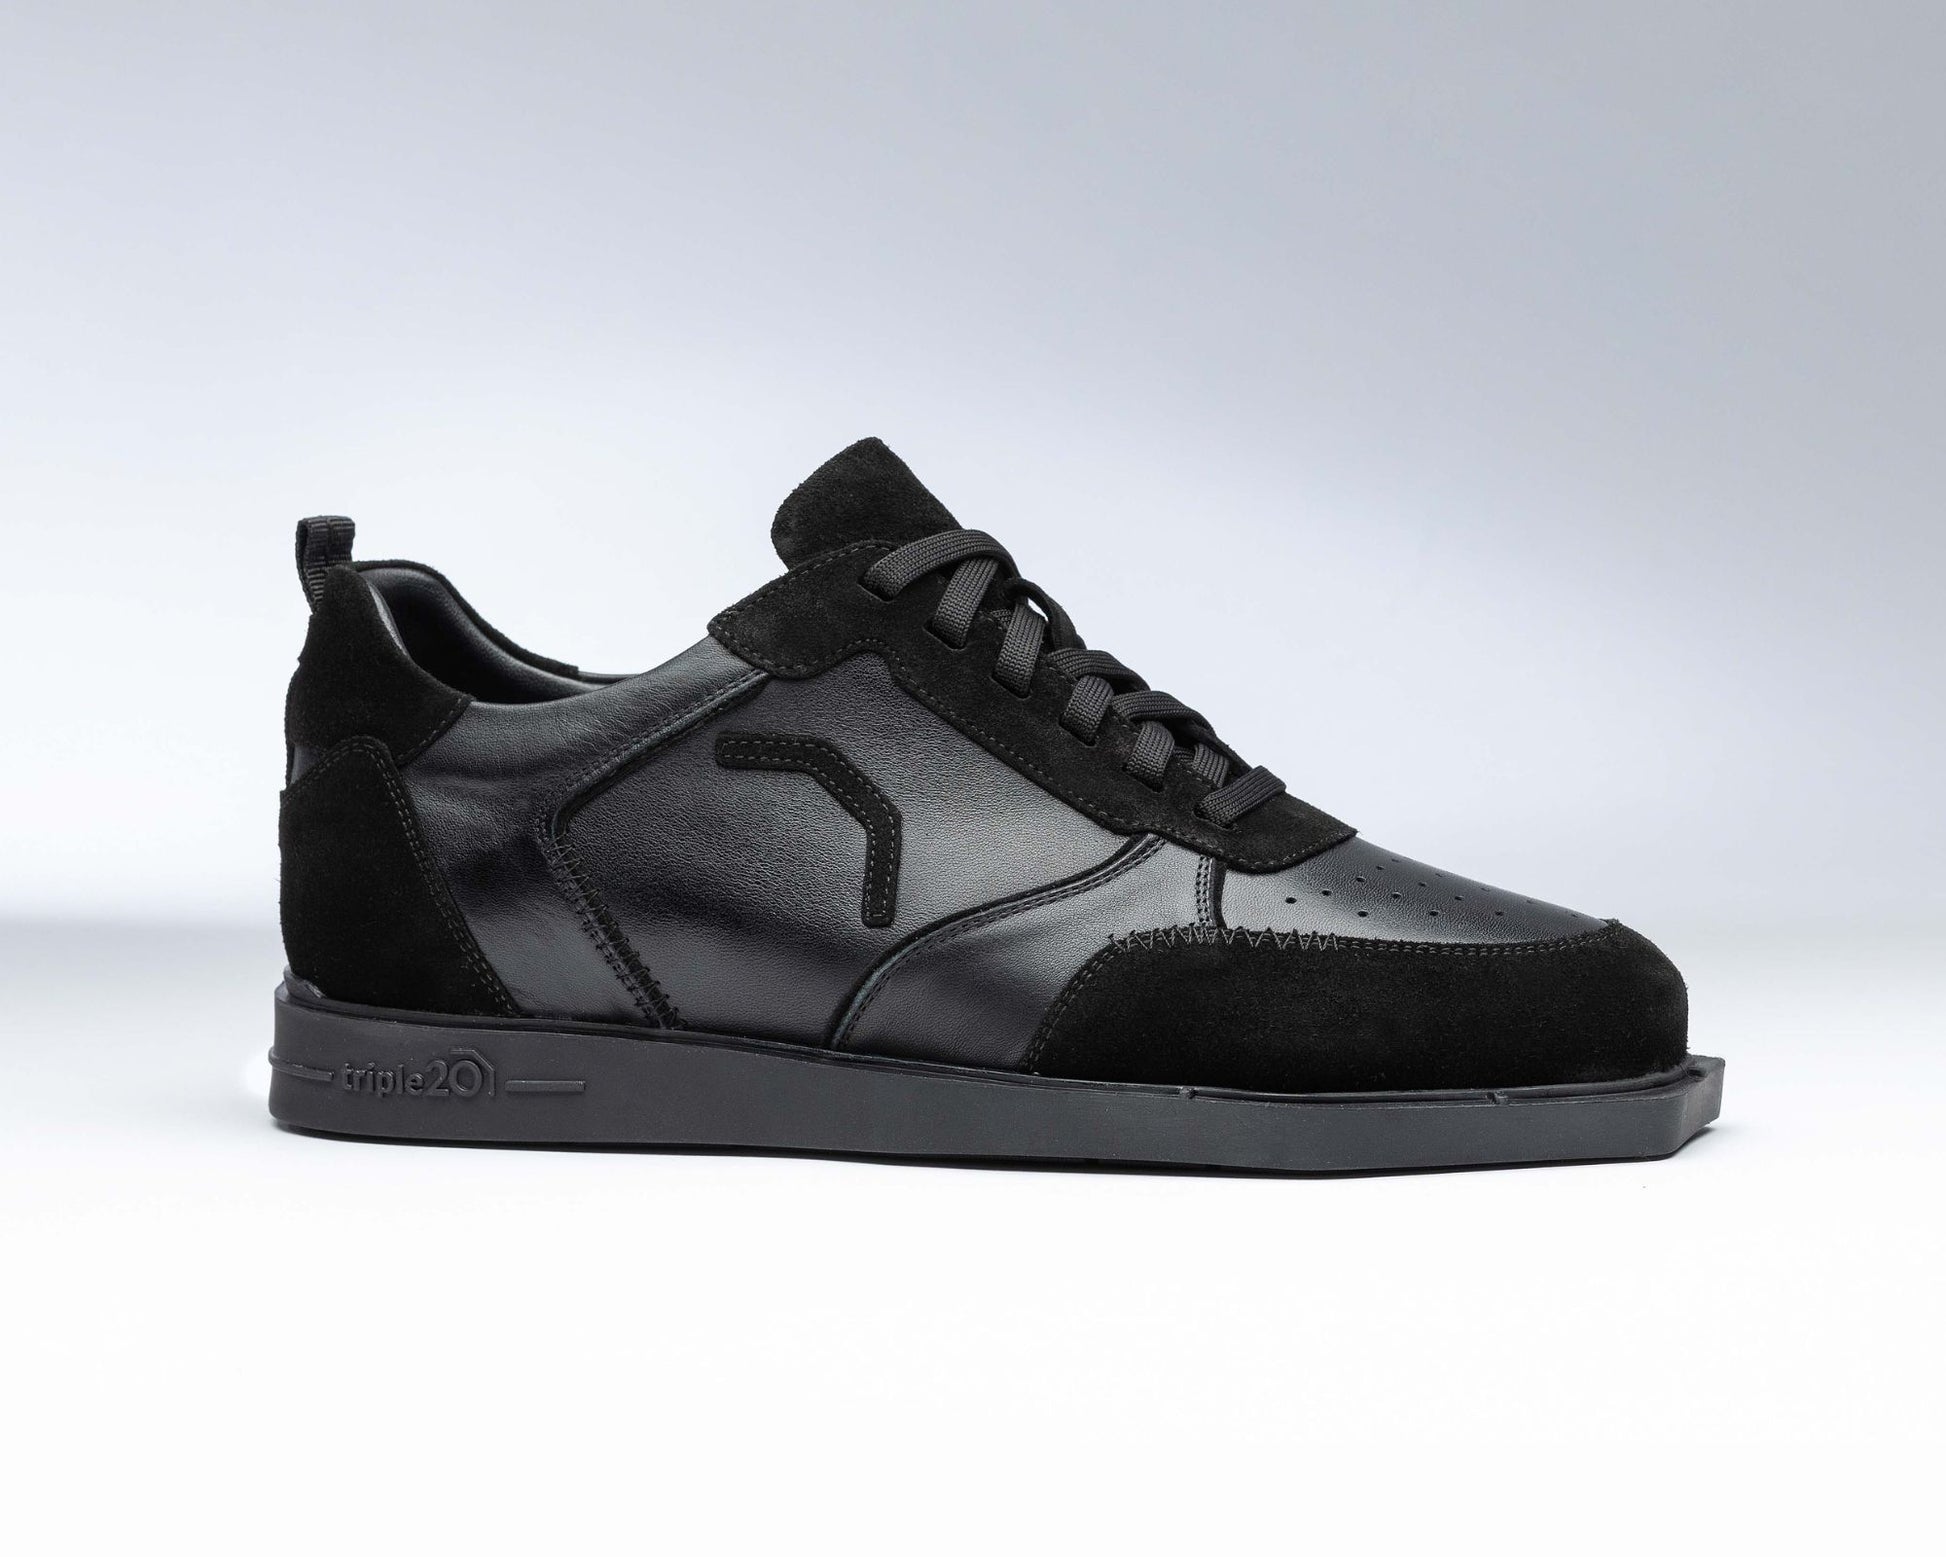 shoe full leather black | Darts Sneaker | triple20® darts – www.dartsshoes.com